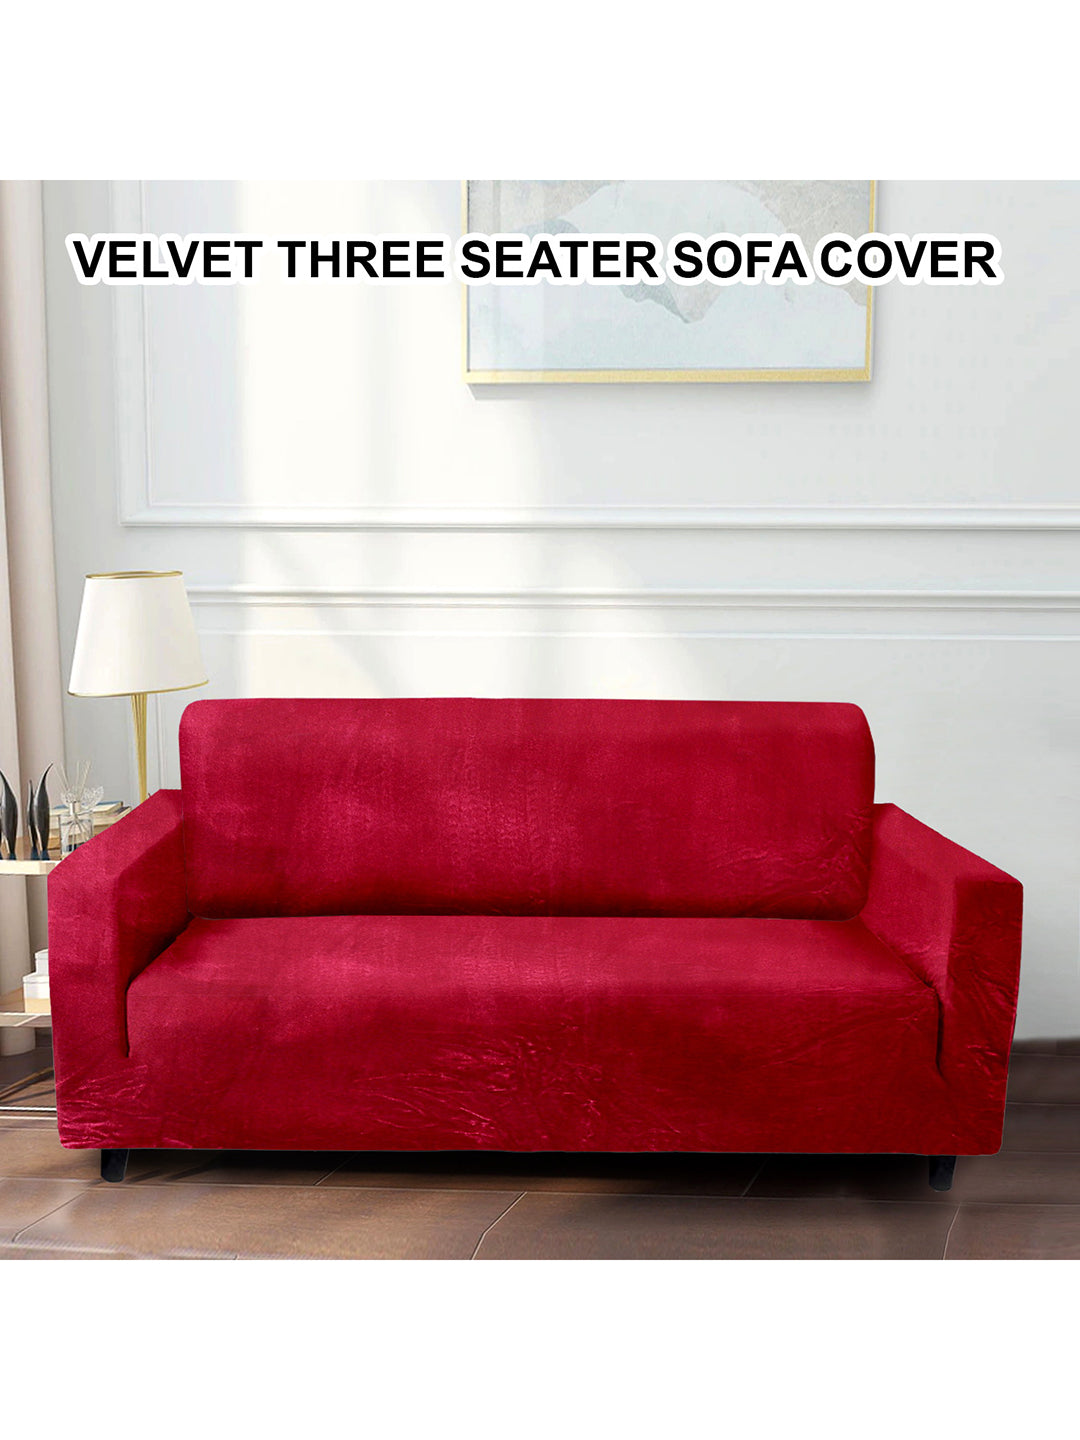 Elastic Stretchable Velvet Sofa Cover 3 Seater-Red